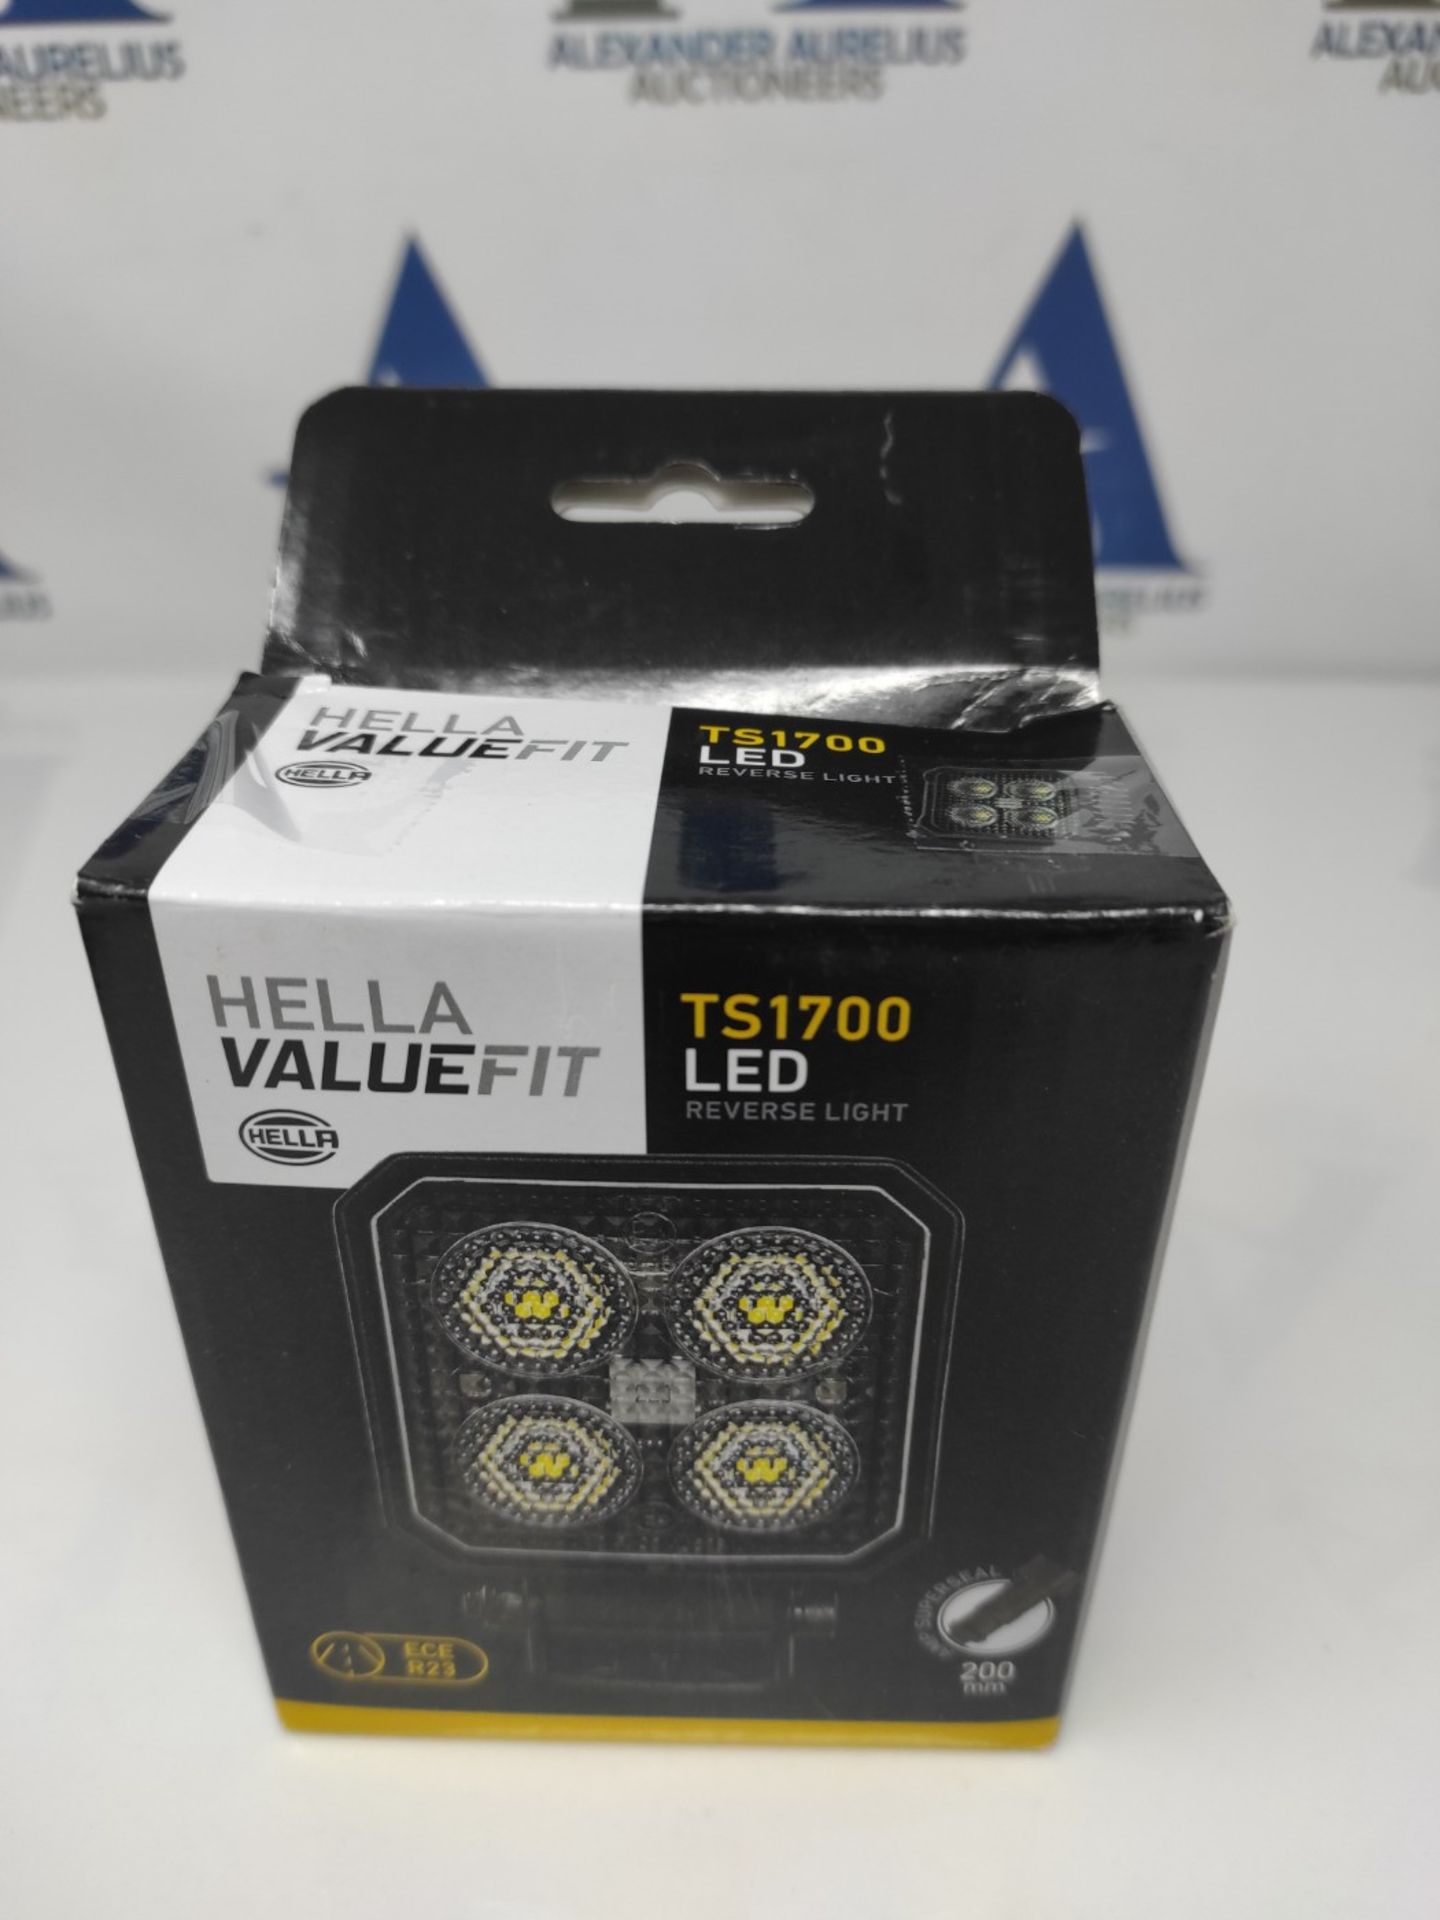 HELLA - LED Reverse Light - Valuefit TS1700 - 24/12V - 2ZR 357 110-531 - Image 2 of 3